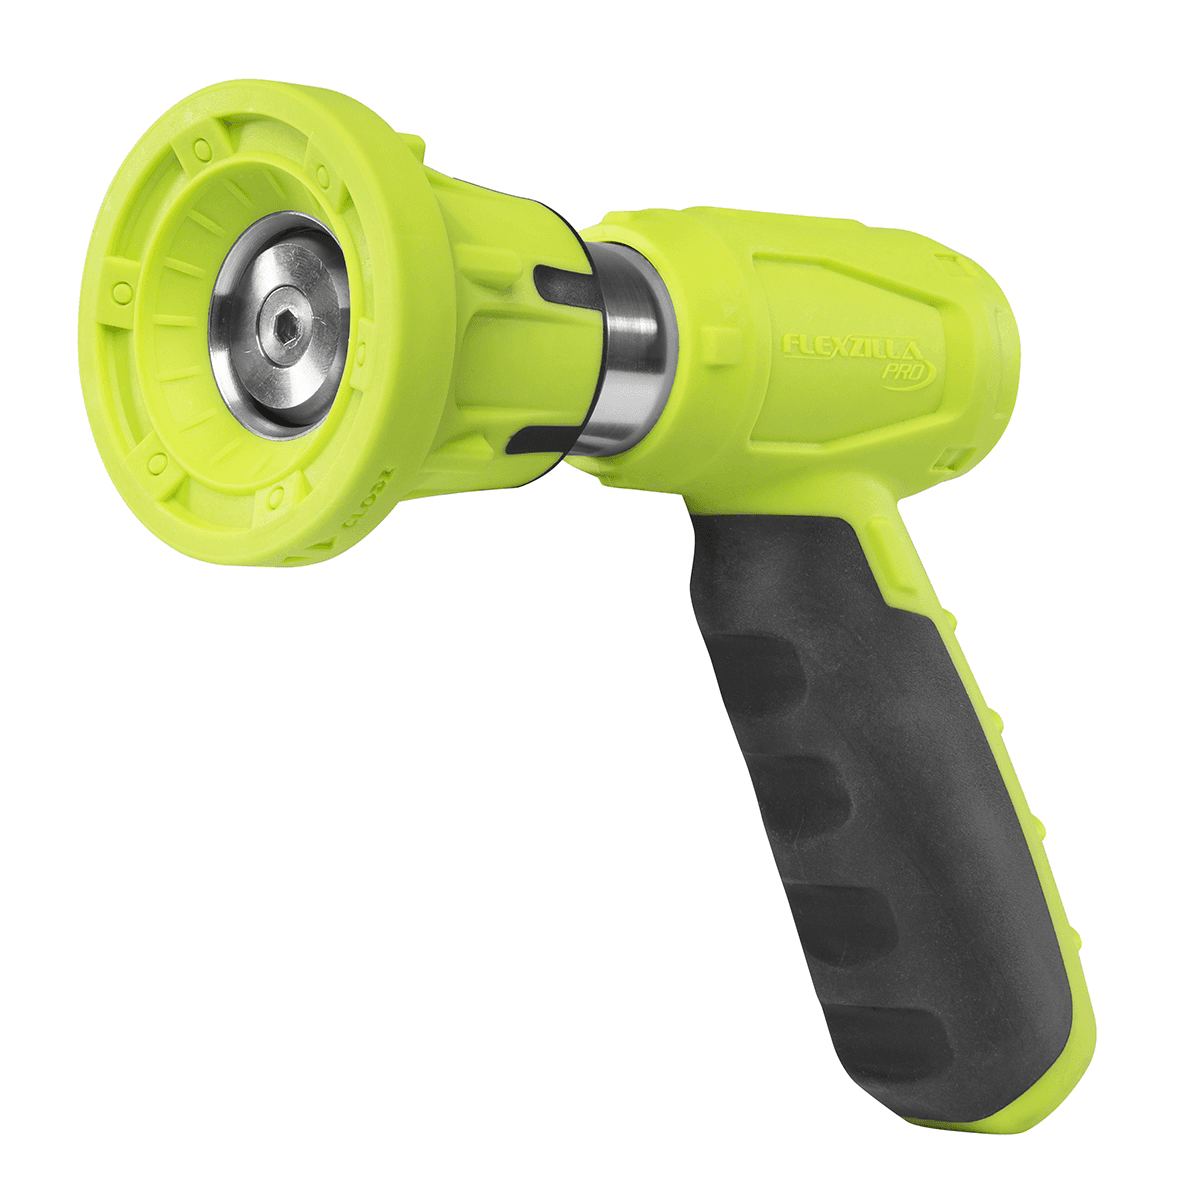 NFZG02-N Flexzilla Pro Pistol Grip Water Hose Nozzle